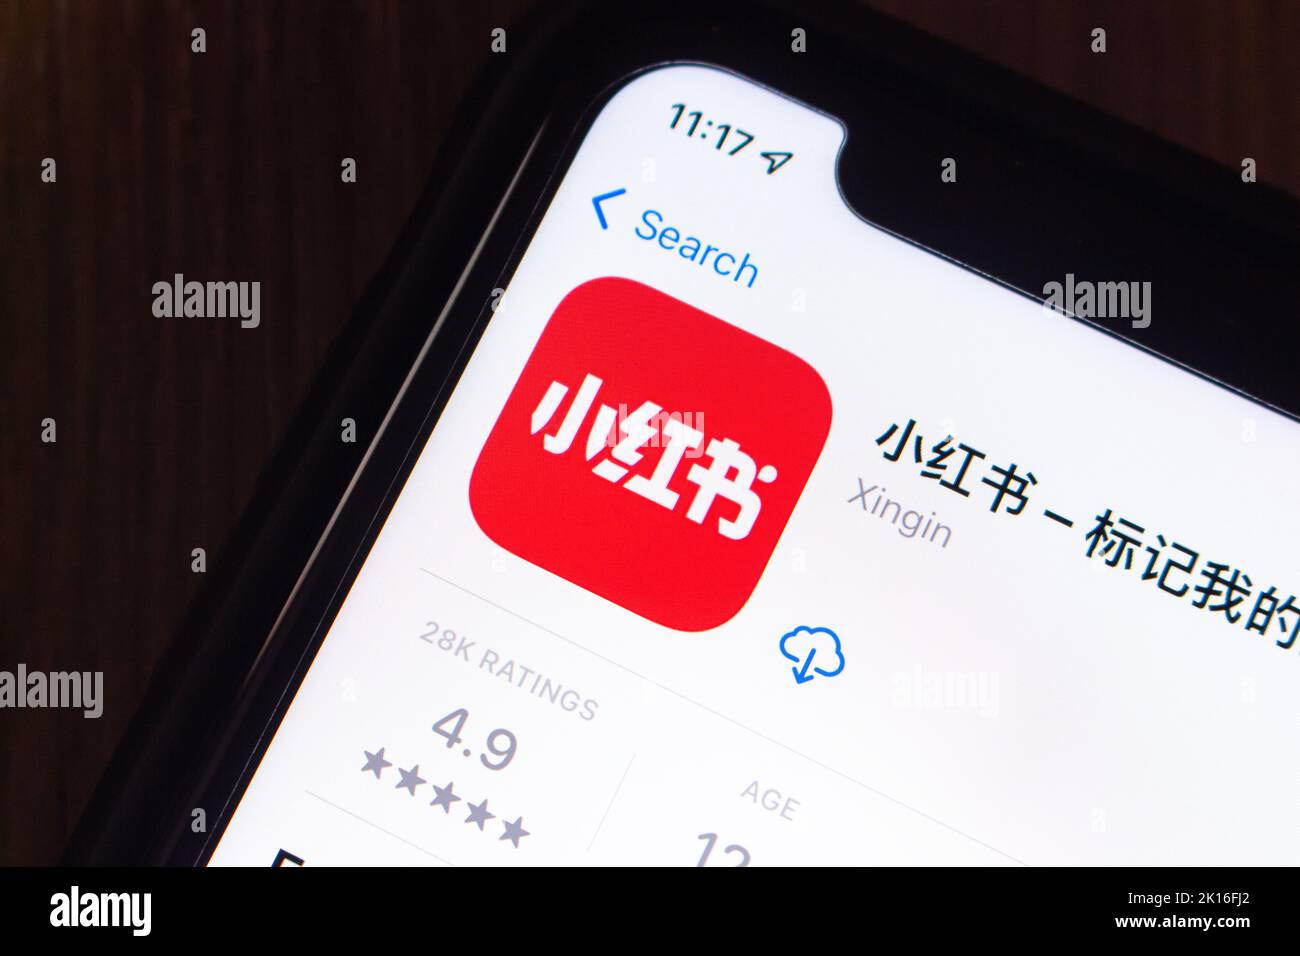 Piattaforma cinese di social media e e-commerce Xiaohongshu (app Xingin, nota anche come Little Red Book, o semplicemente Redbook) in App Store su iPhone. Foto Stock